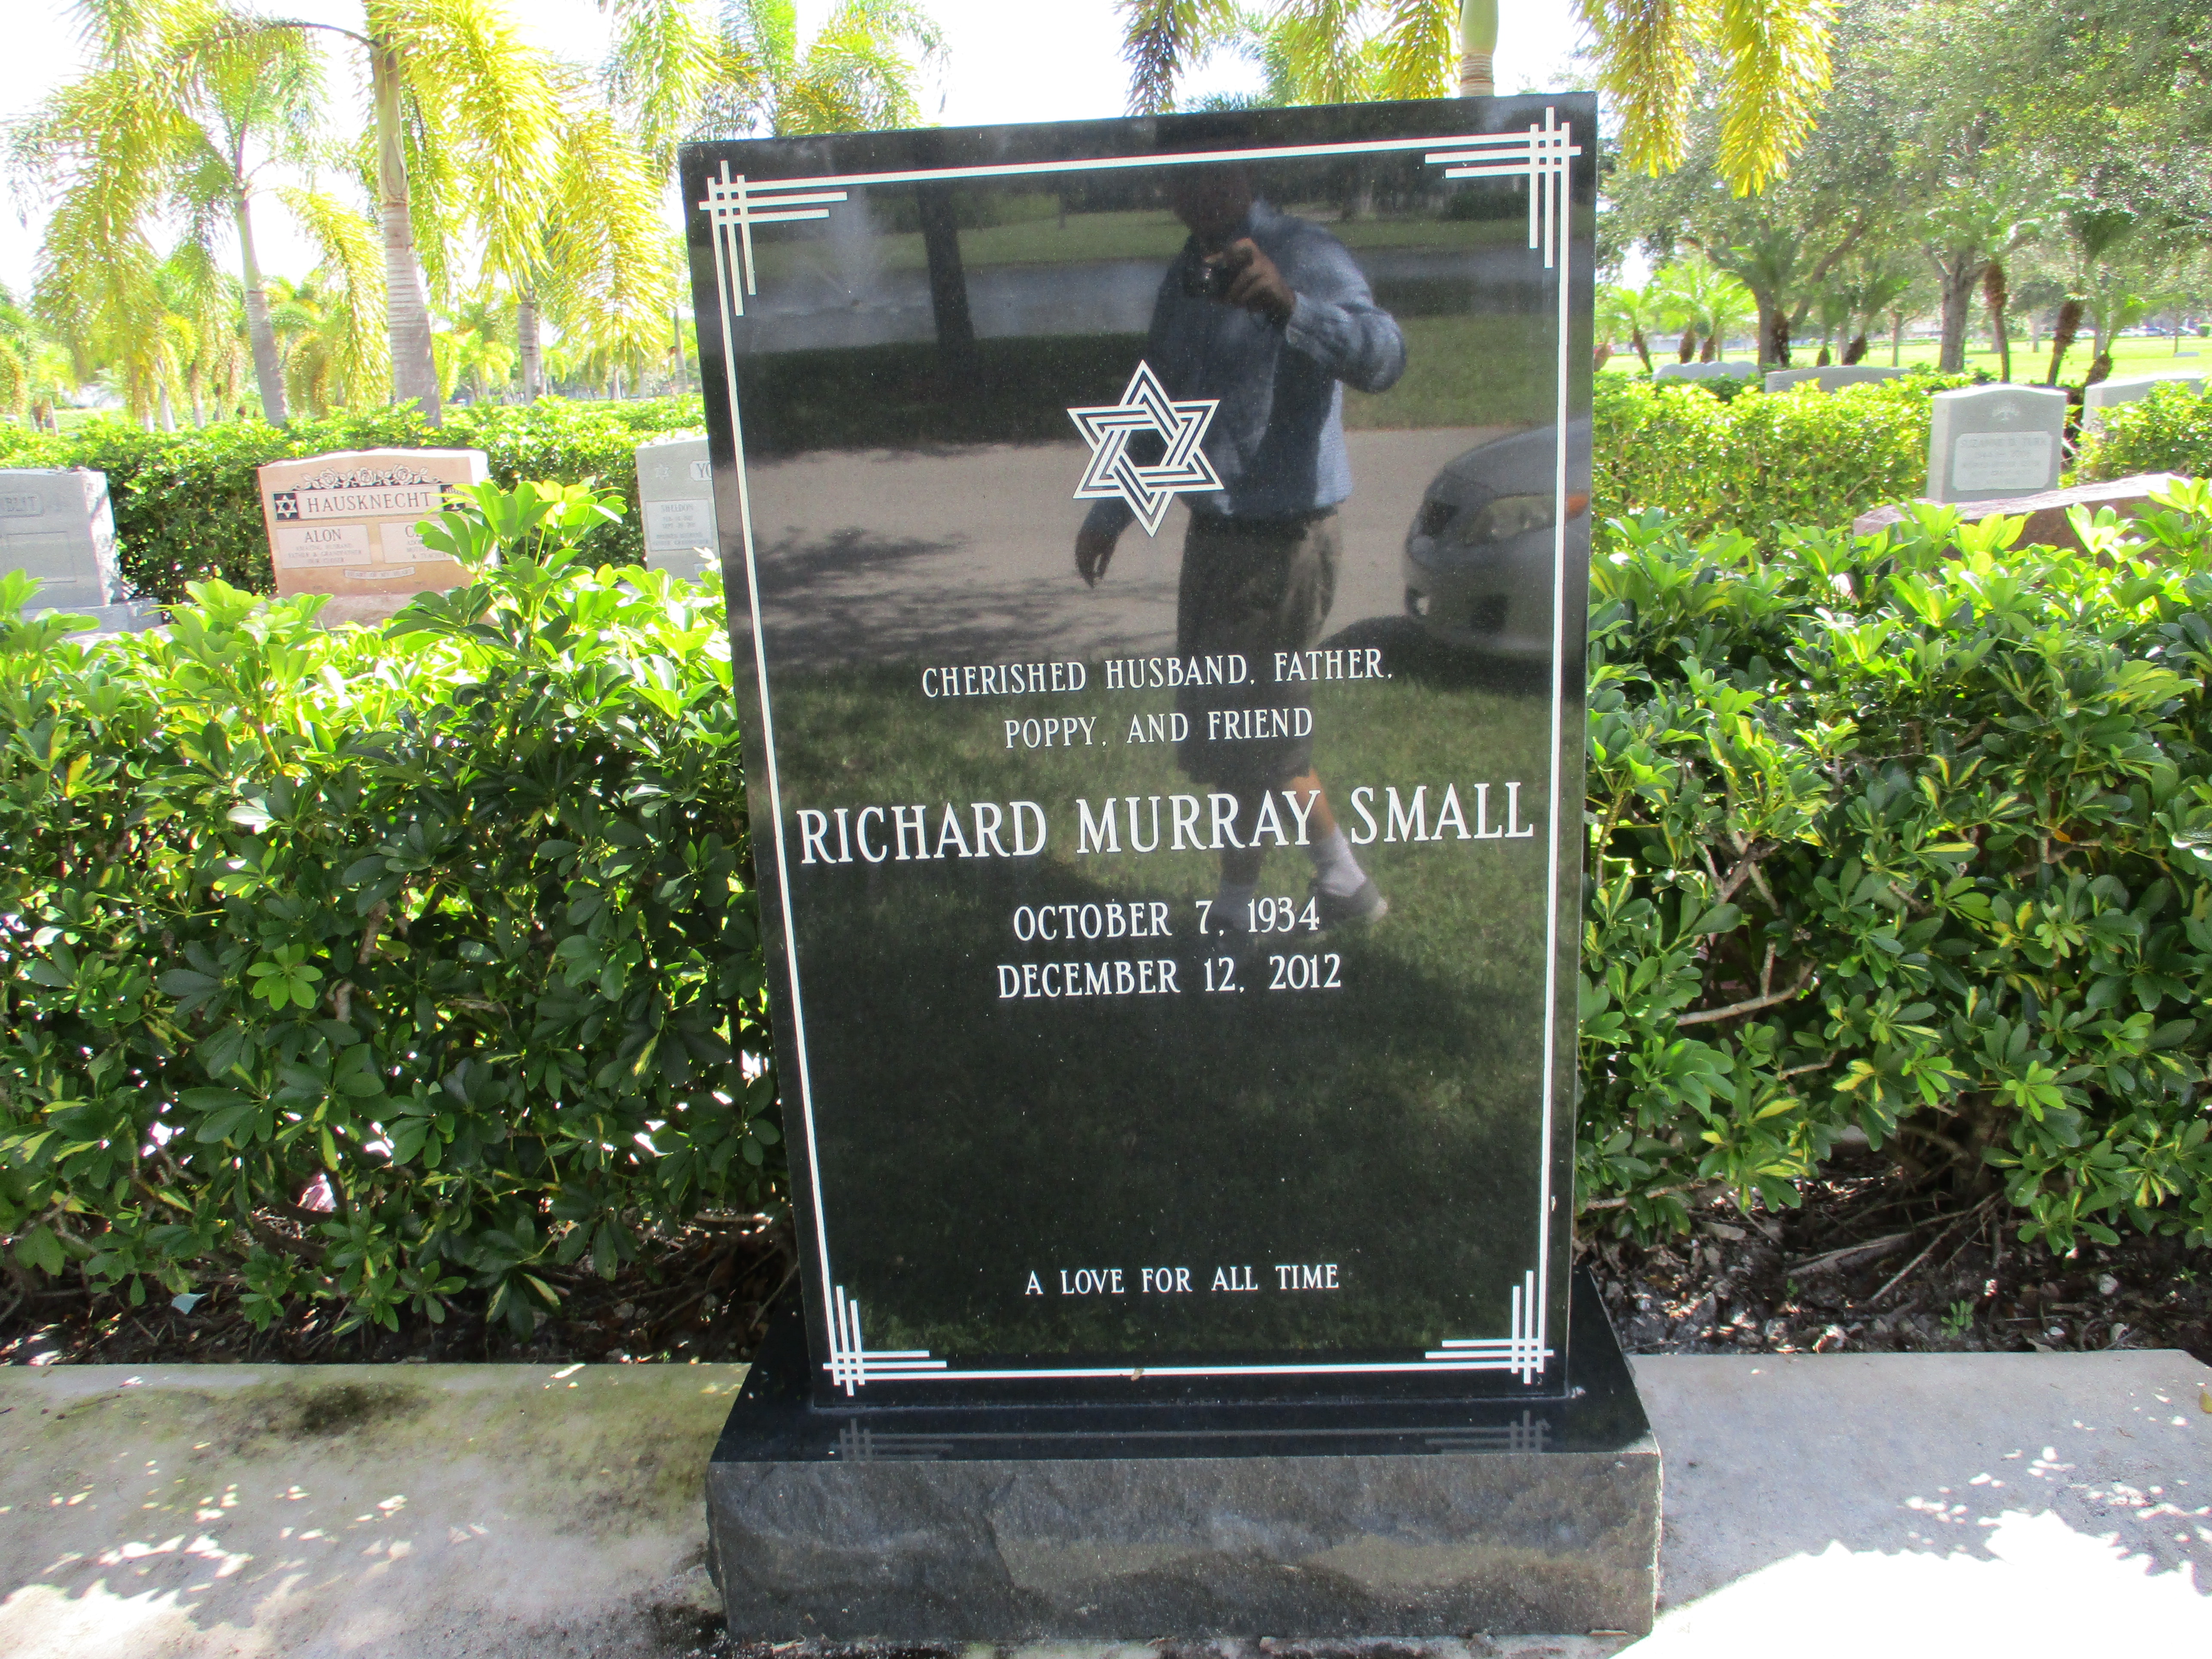 Richard Murray Small